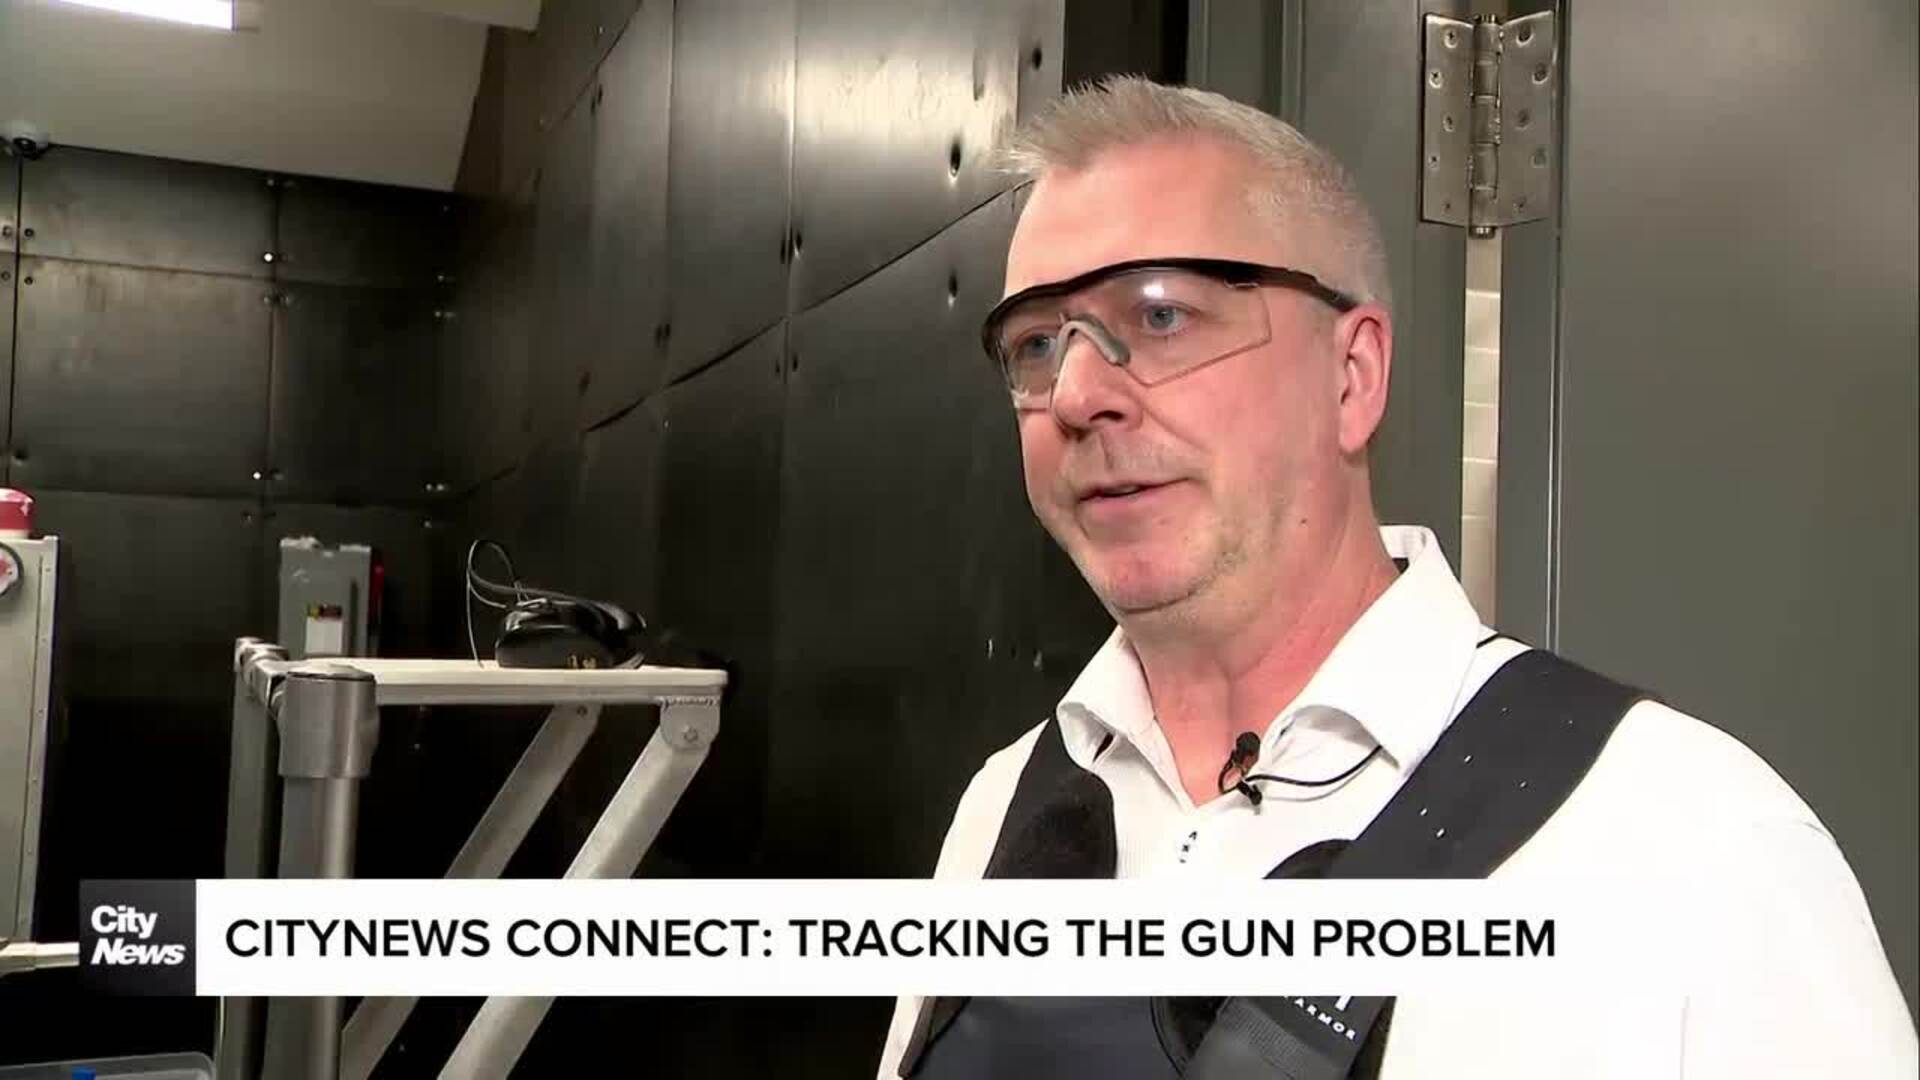 CityNews Connect: Tracking the gun problem